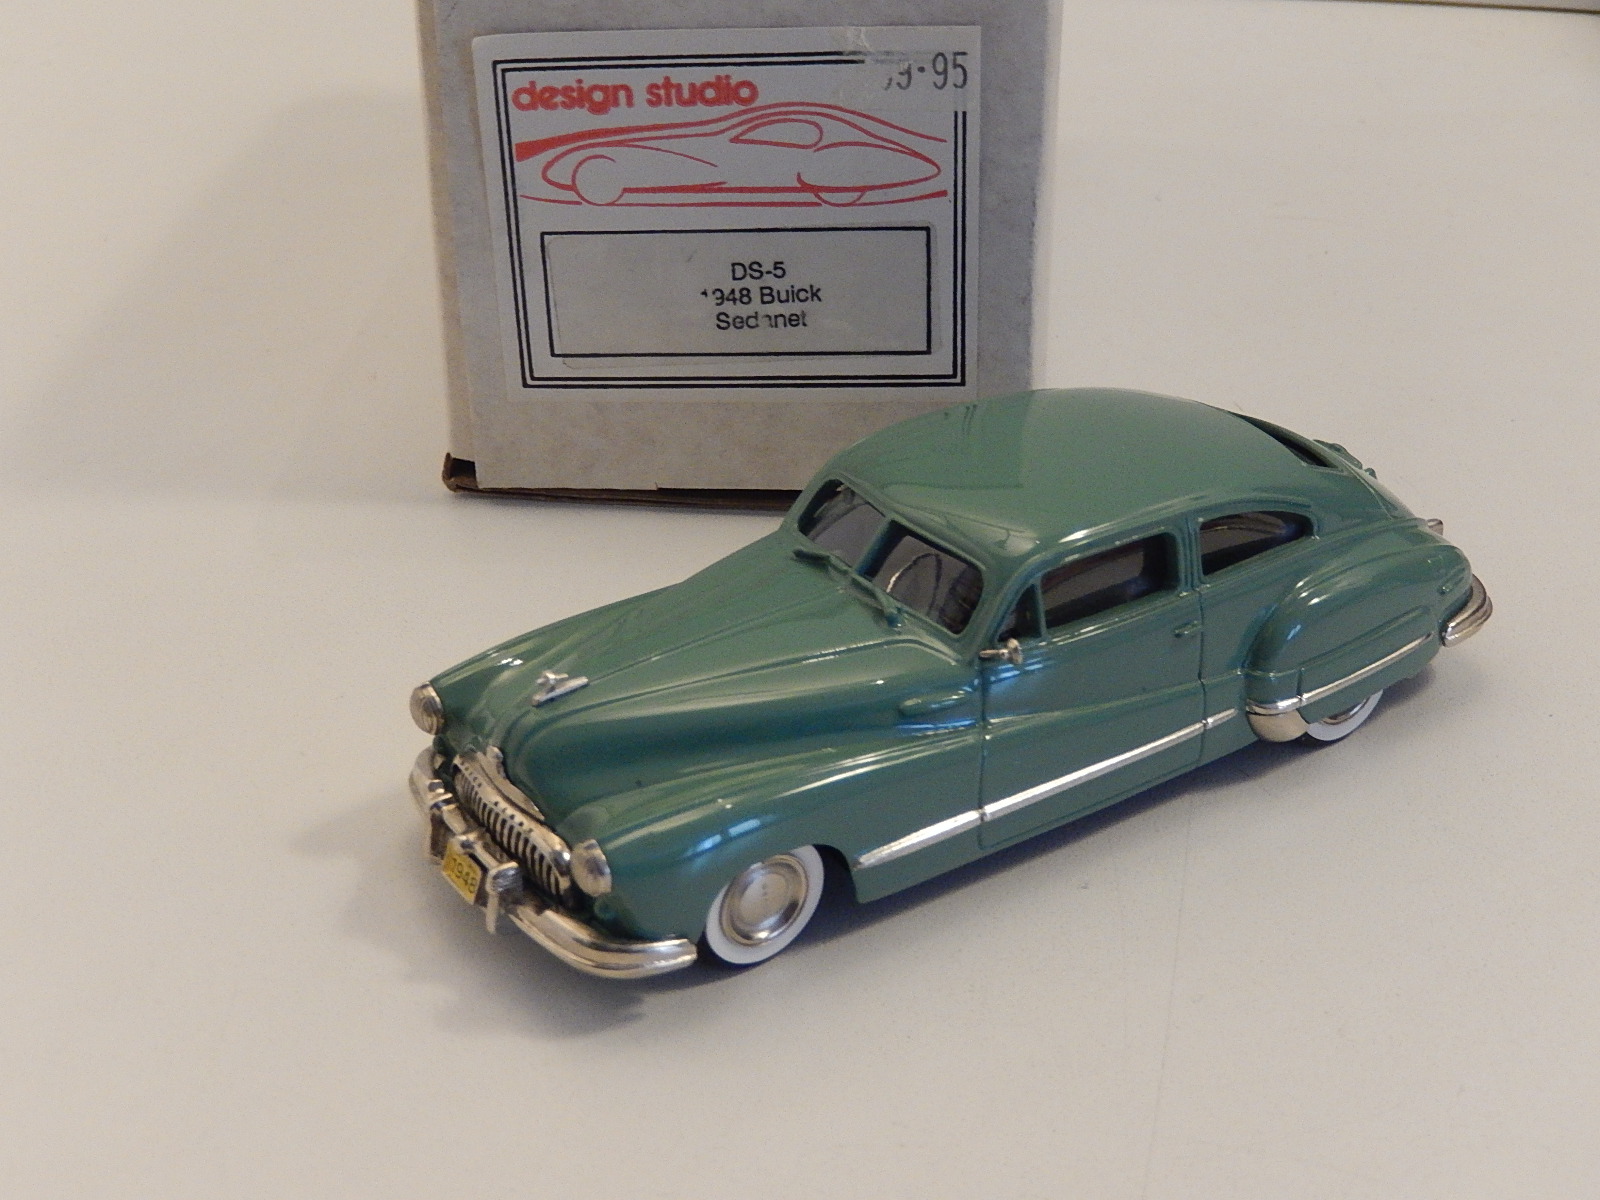 Motor City : Buick Sedanet 1948